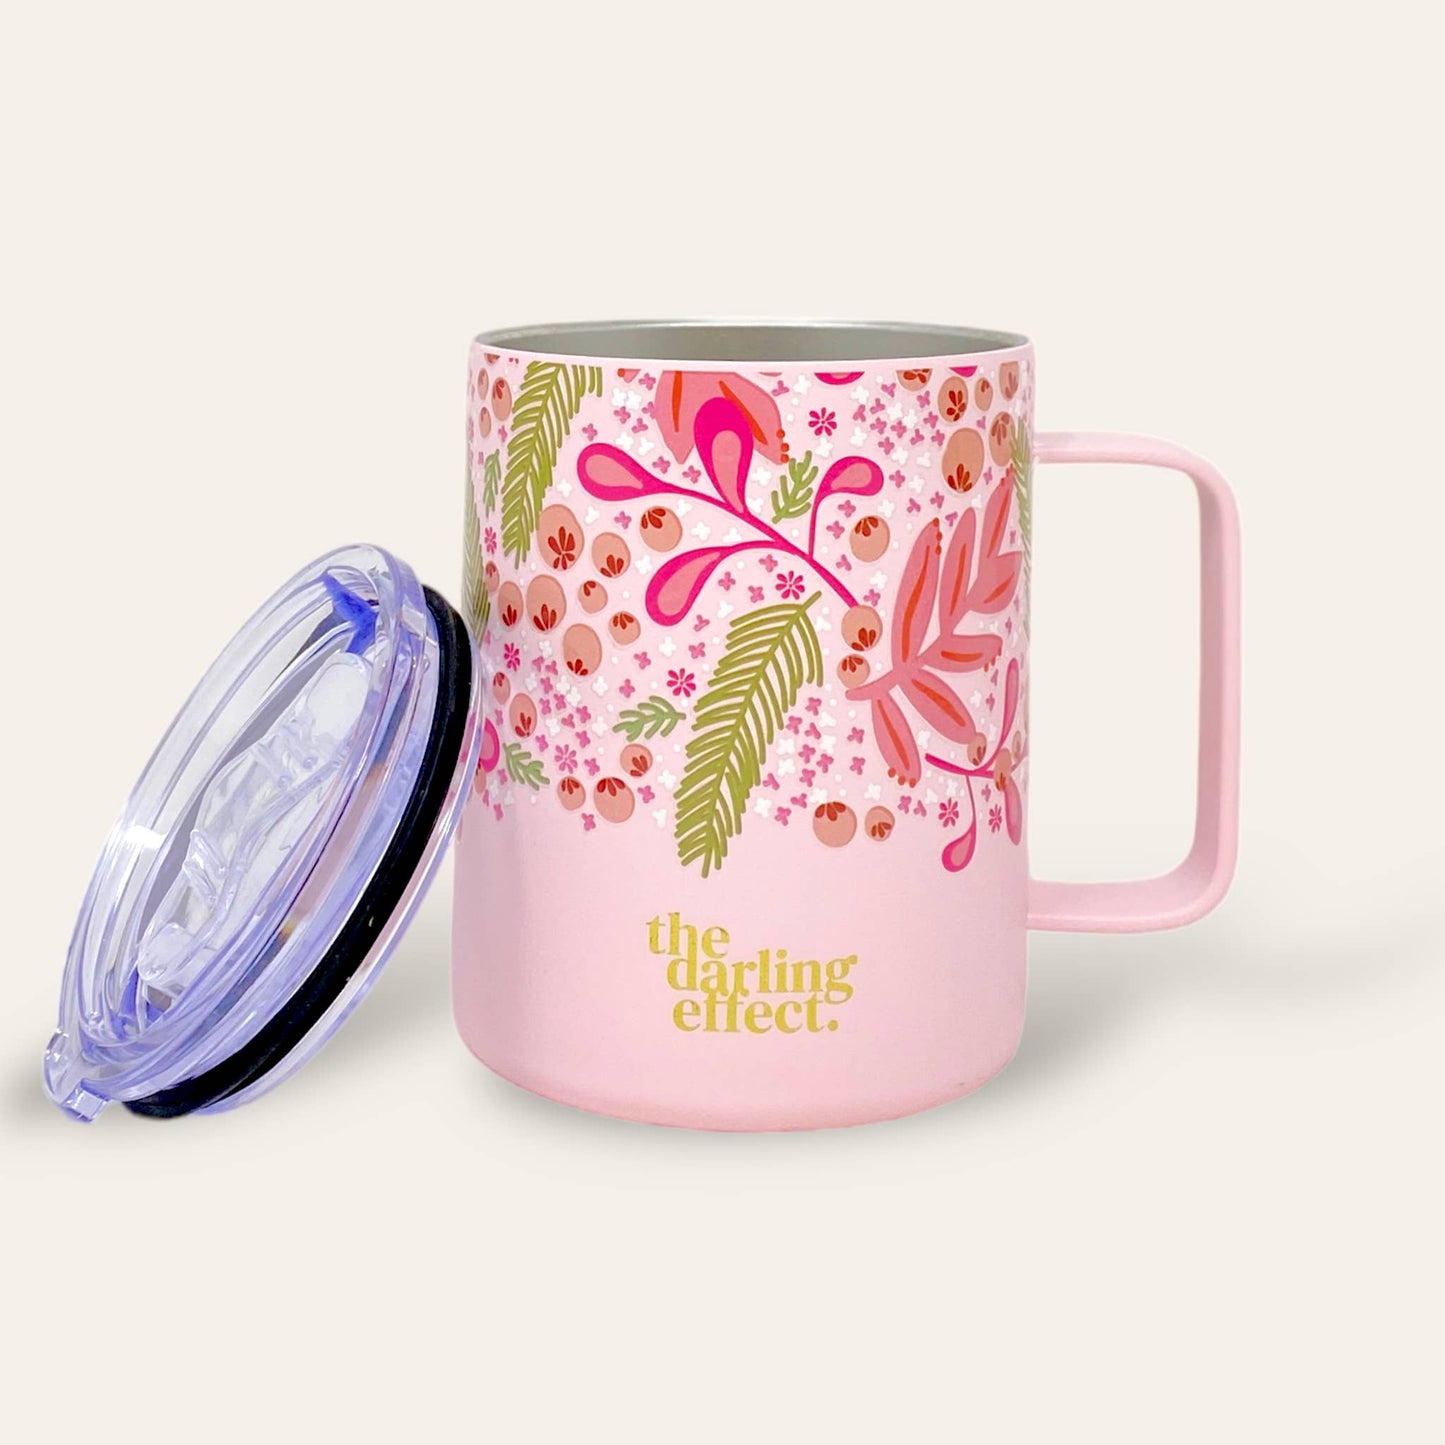 14 oz Insulated Mug - Jolly Sprig Pink